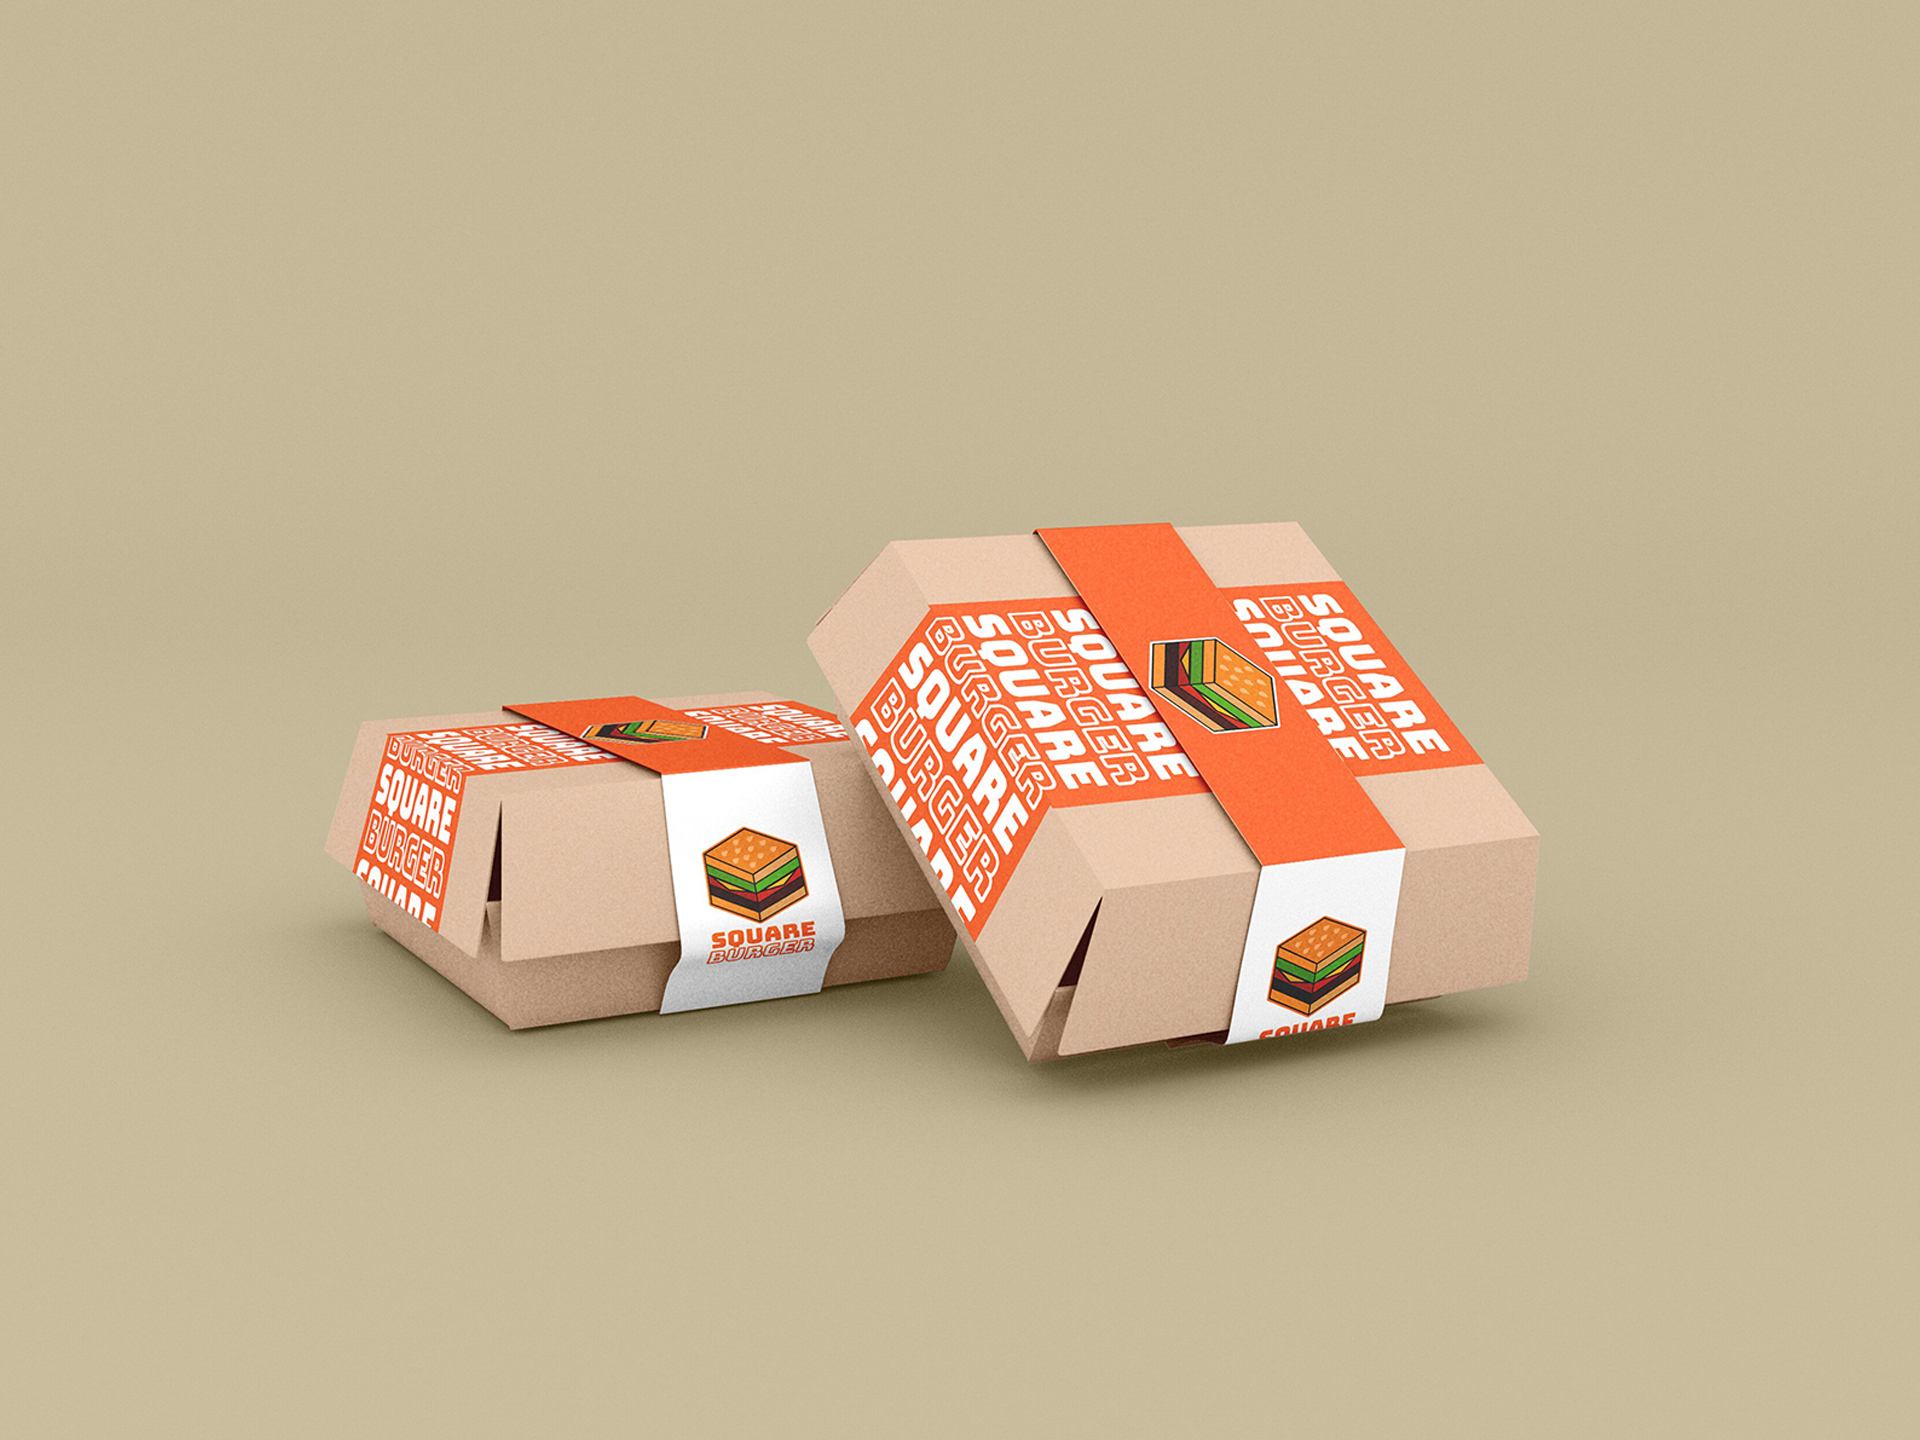 2 cardboard hamburger boxes displaying the Square Burger branding.